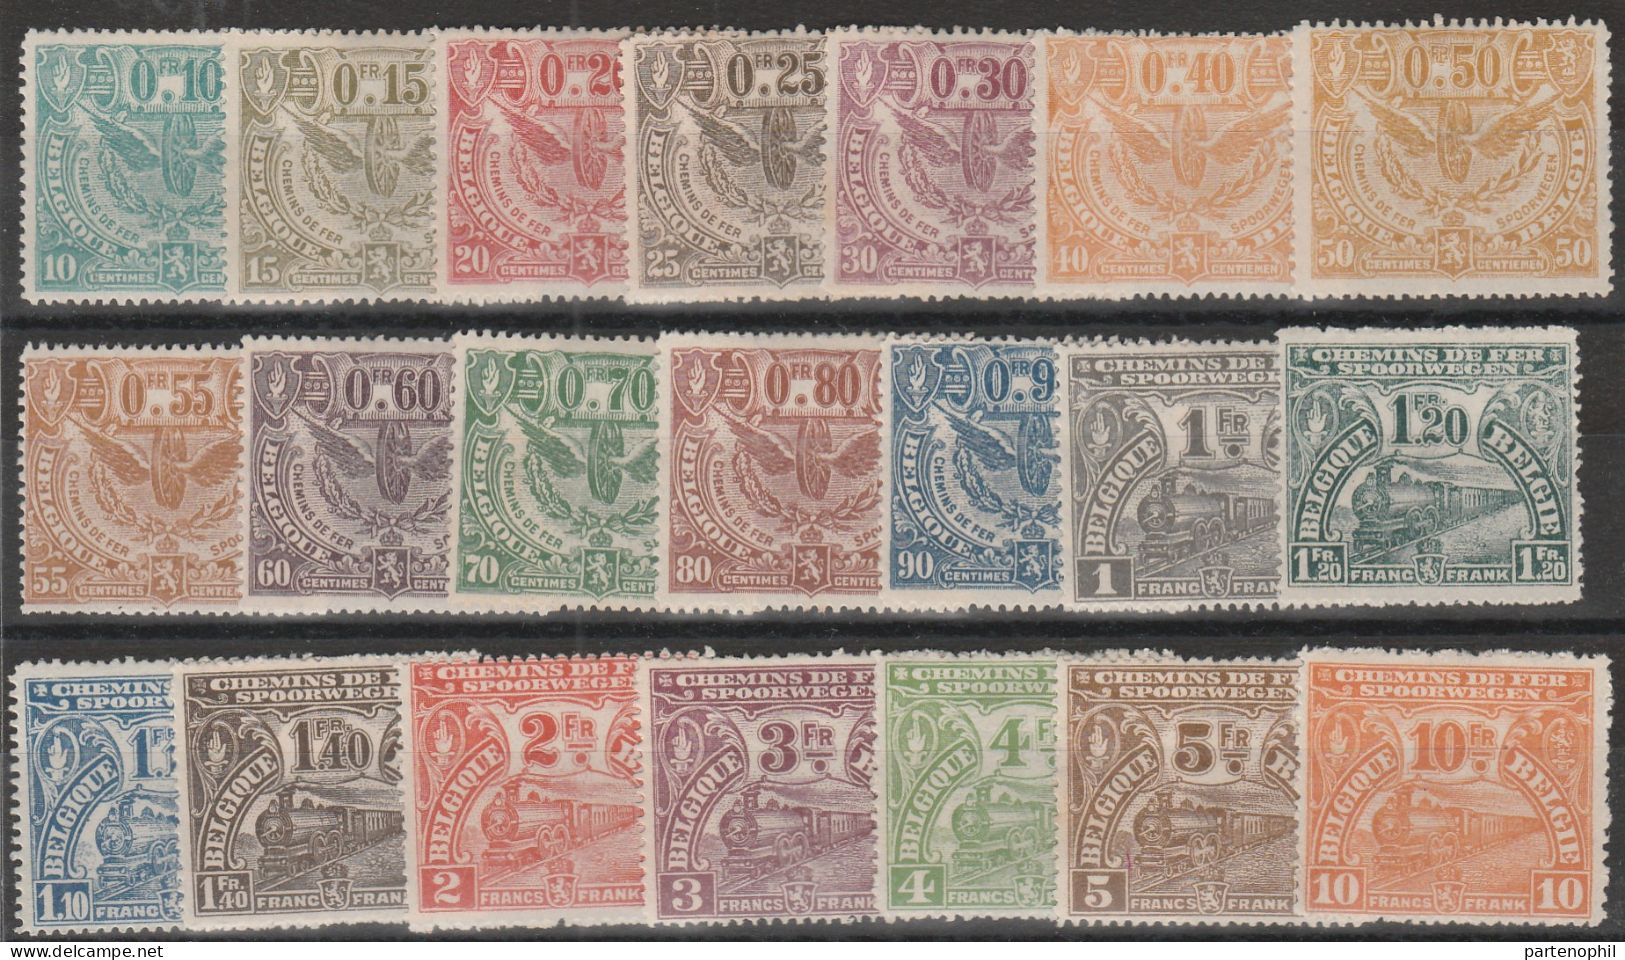 445 Belgio  1920 - Pacchi Postali - Ruota Alata O Locomotiva N. 79/99, 21 Valori. Cat. € 1400,00. MH - Mint